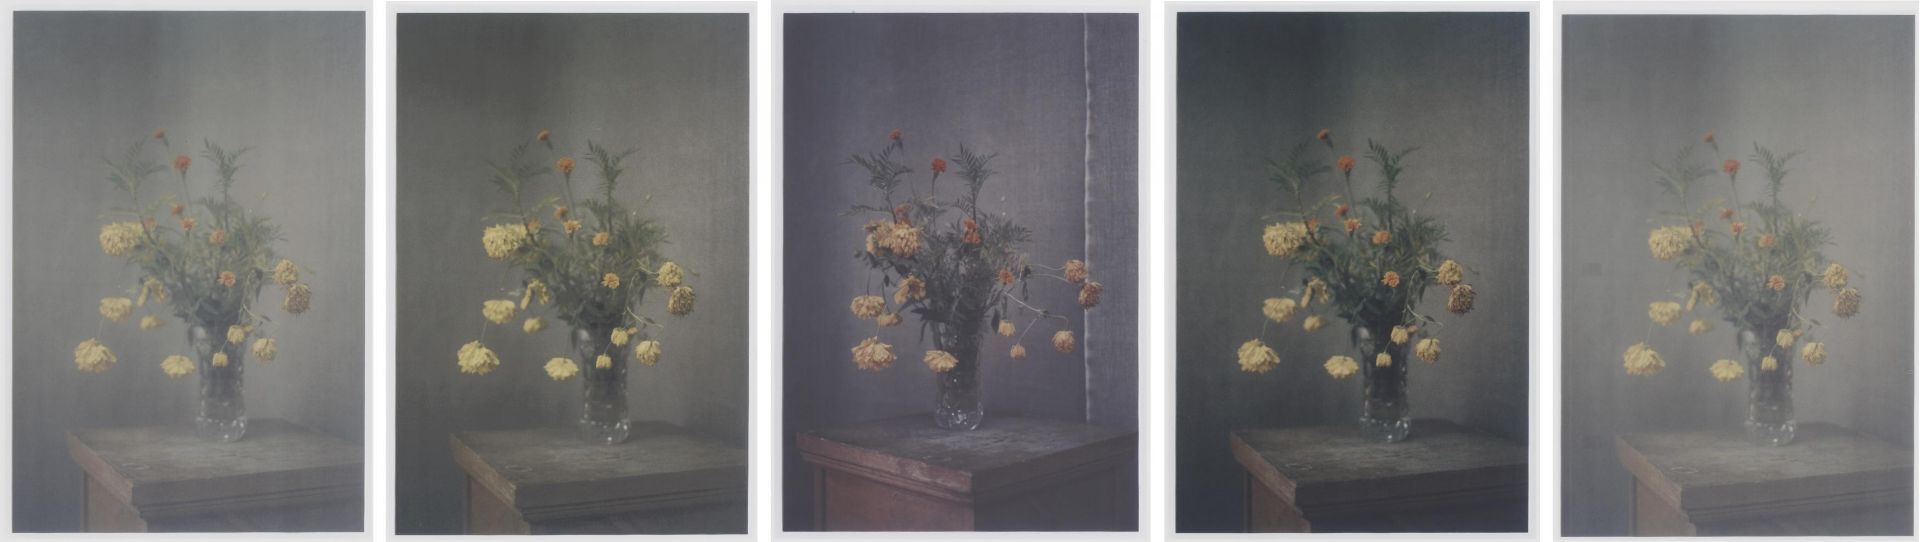 KERBER, INGA1982 BerlinTitel: Cliché of a flower bouquet X (5-teiliges Werk). Datierung: 2012.